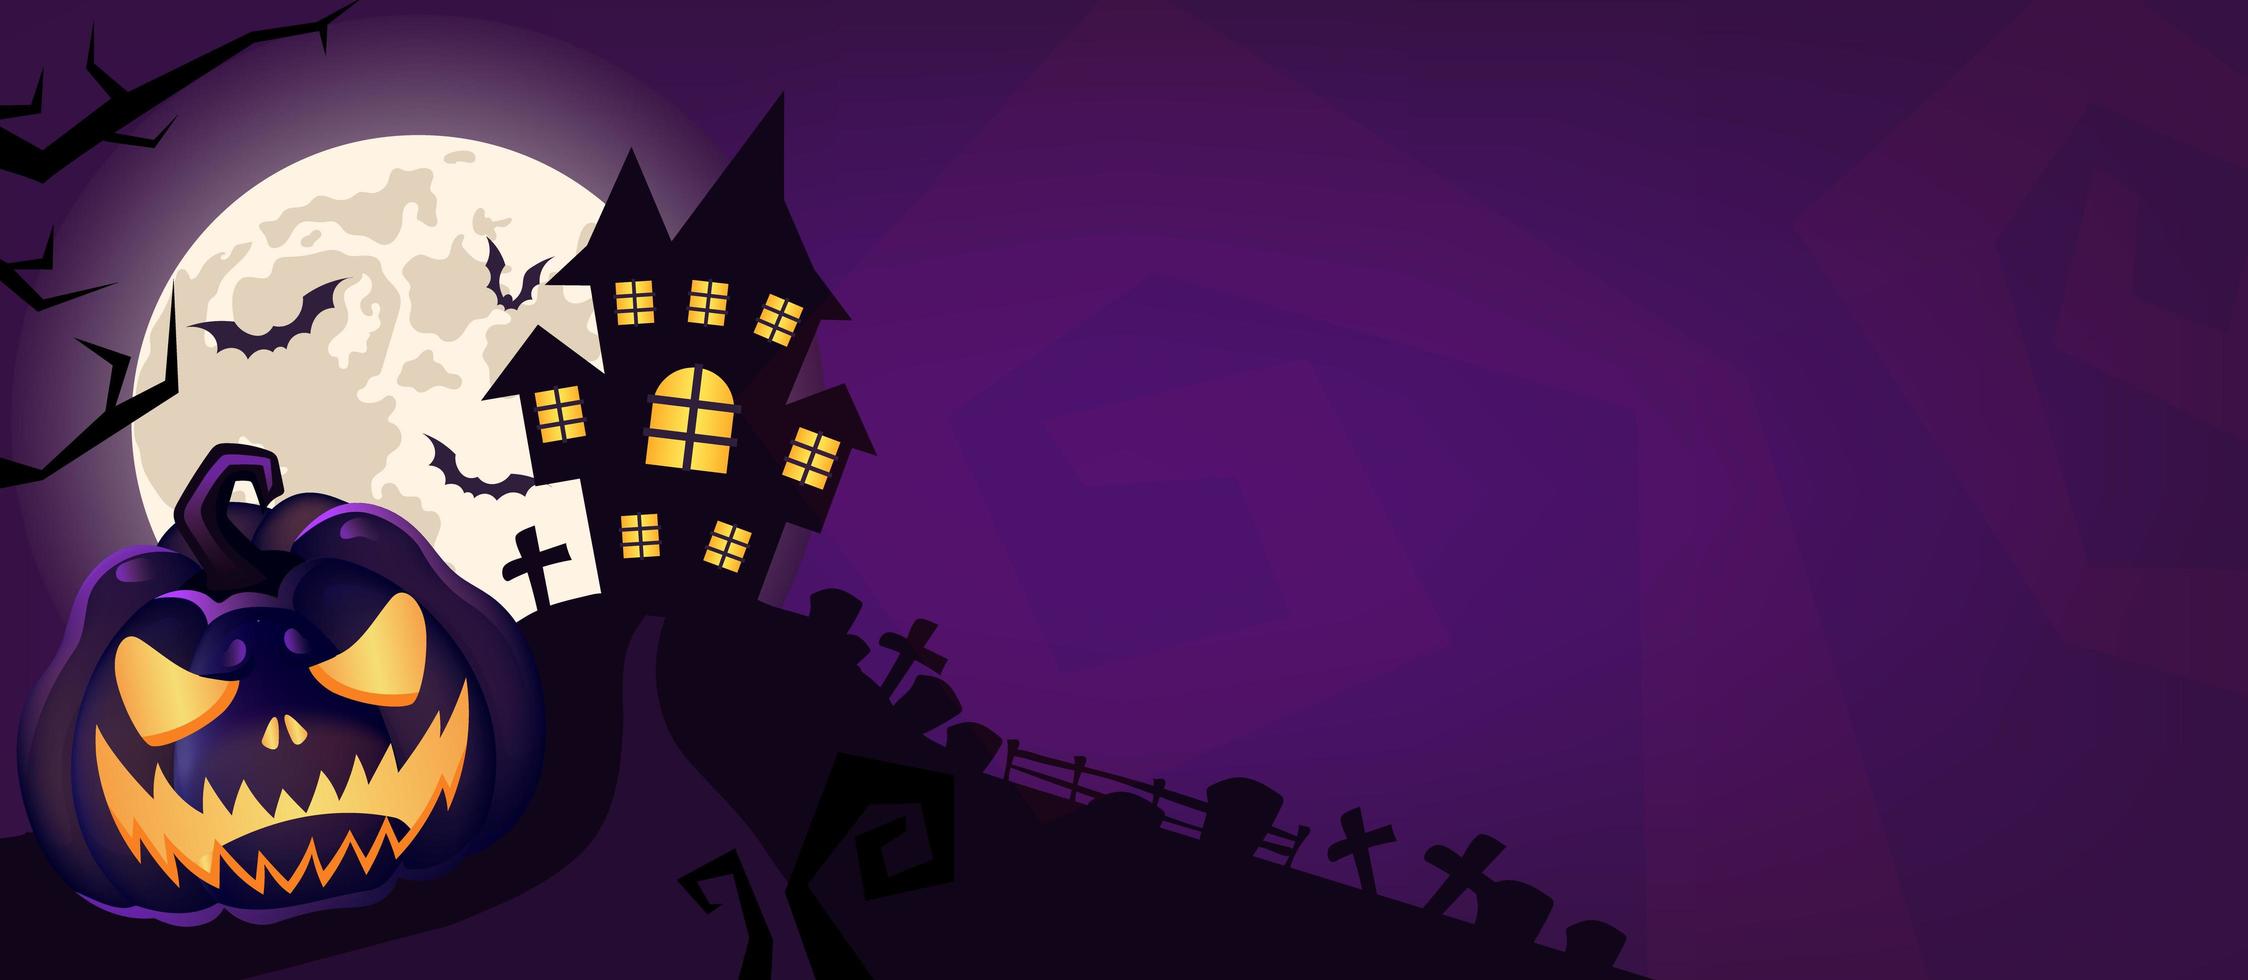 Halloween scary purple vector background.